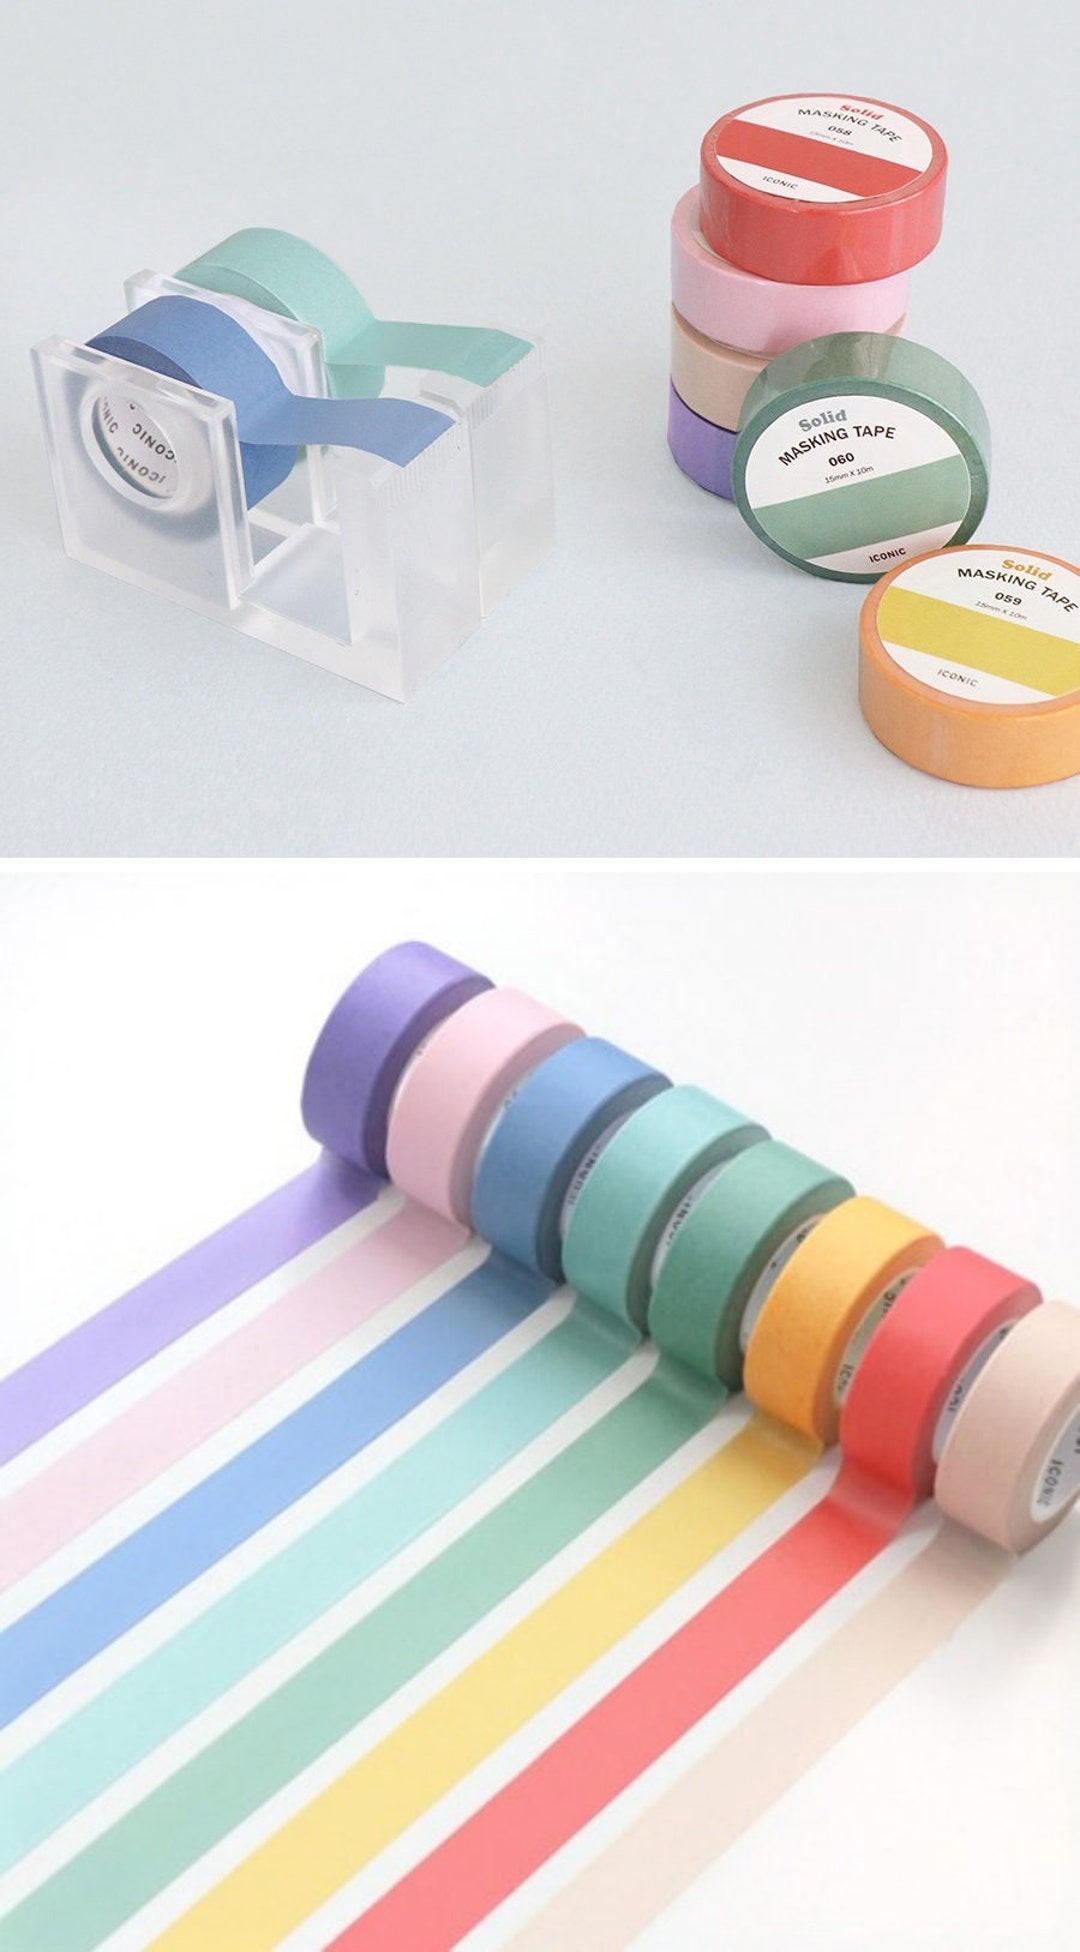 MT Solid Masking Tape Pastel Color Japanese Washi Tape 12 Colors